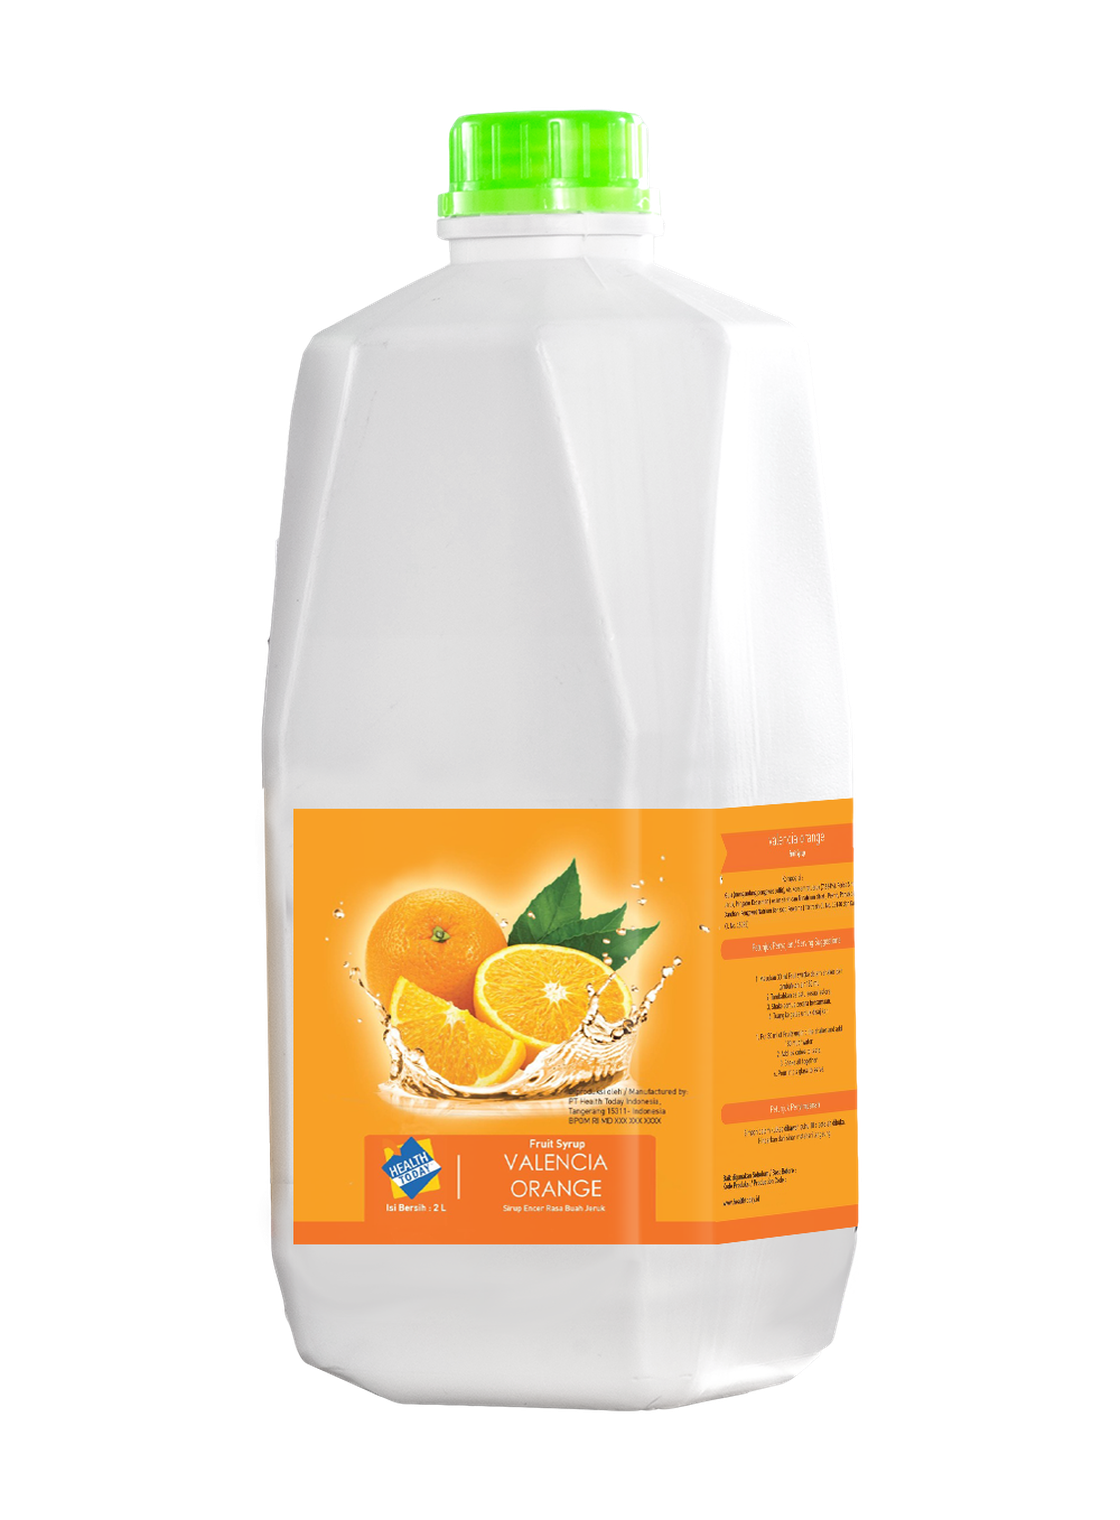 20 ml Health Today Orange Fruit Mix